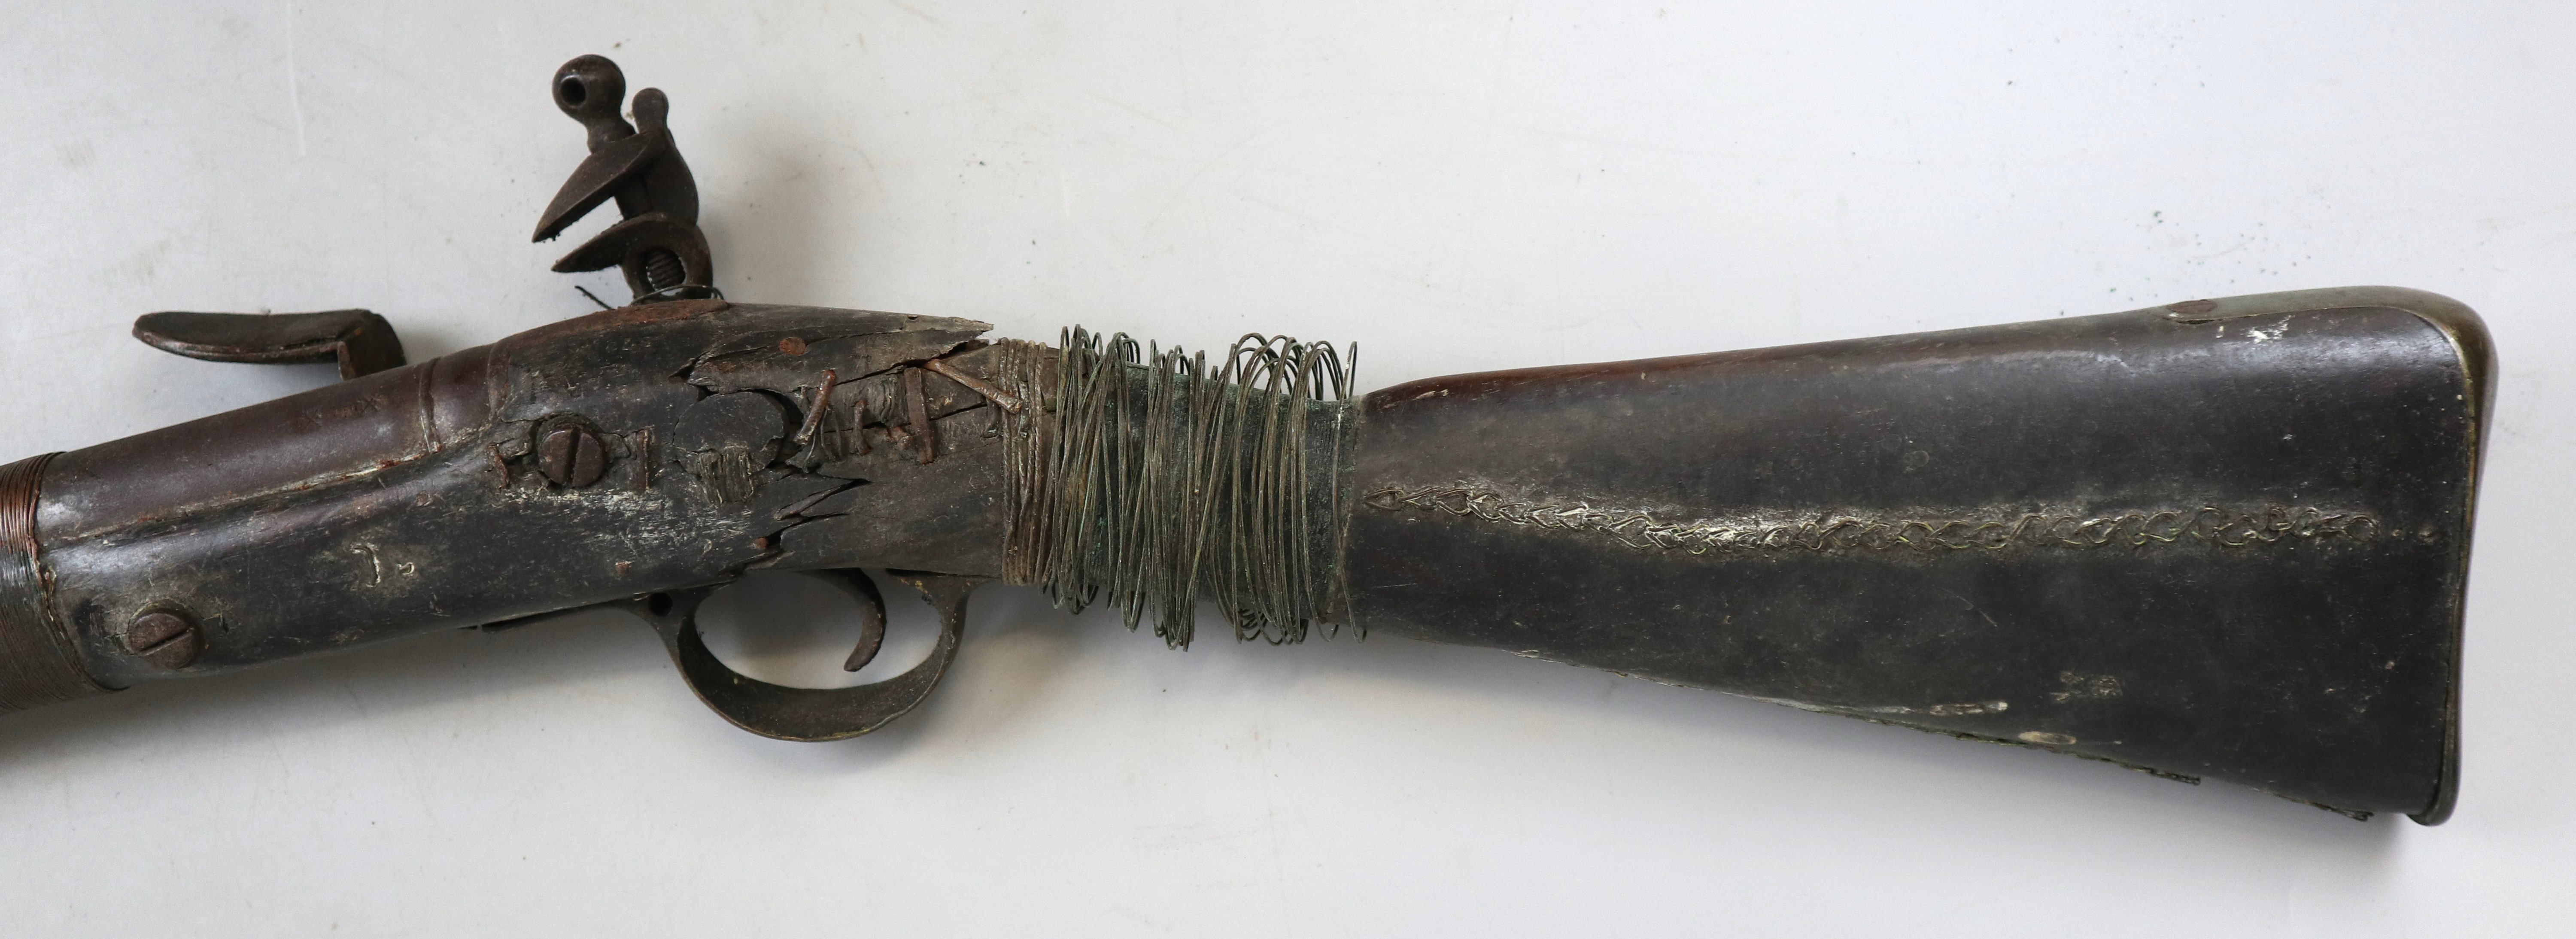 Antique flintlock rifle A/F - Image 5 of 5